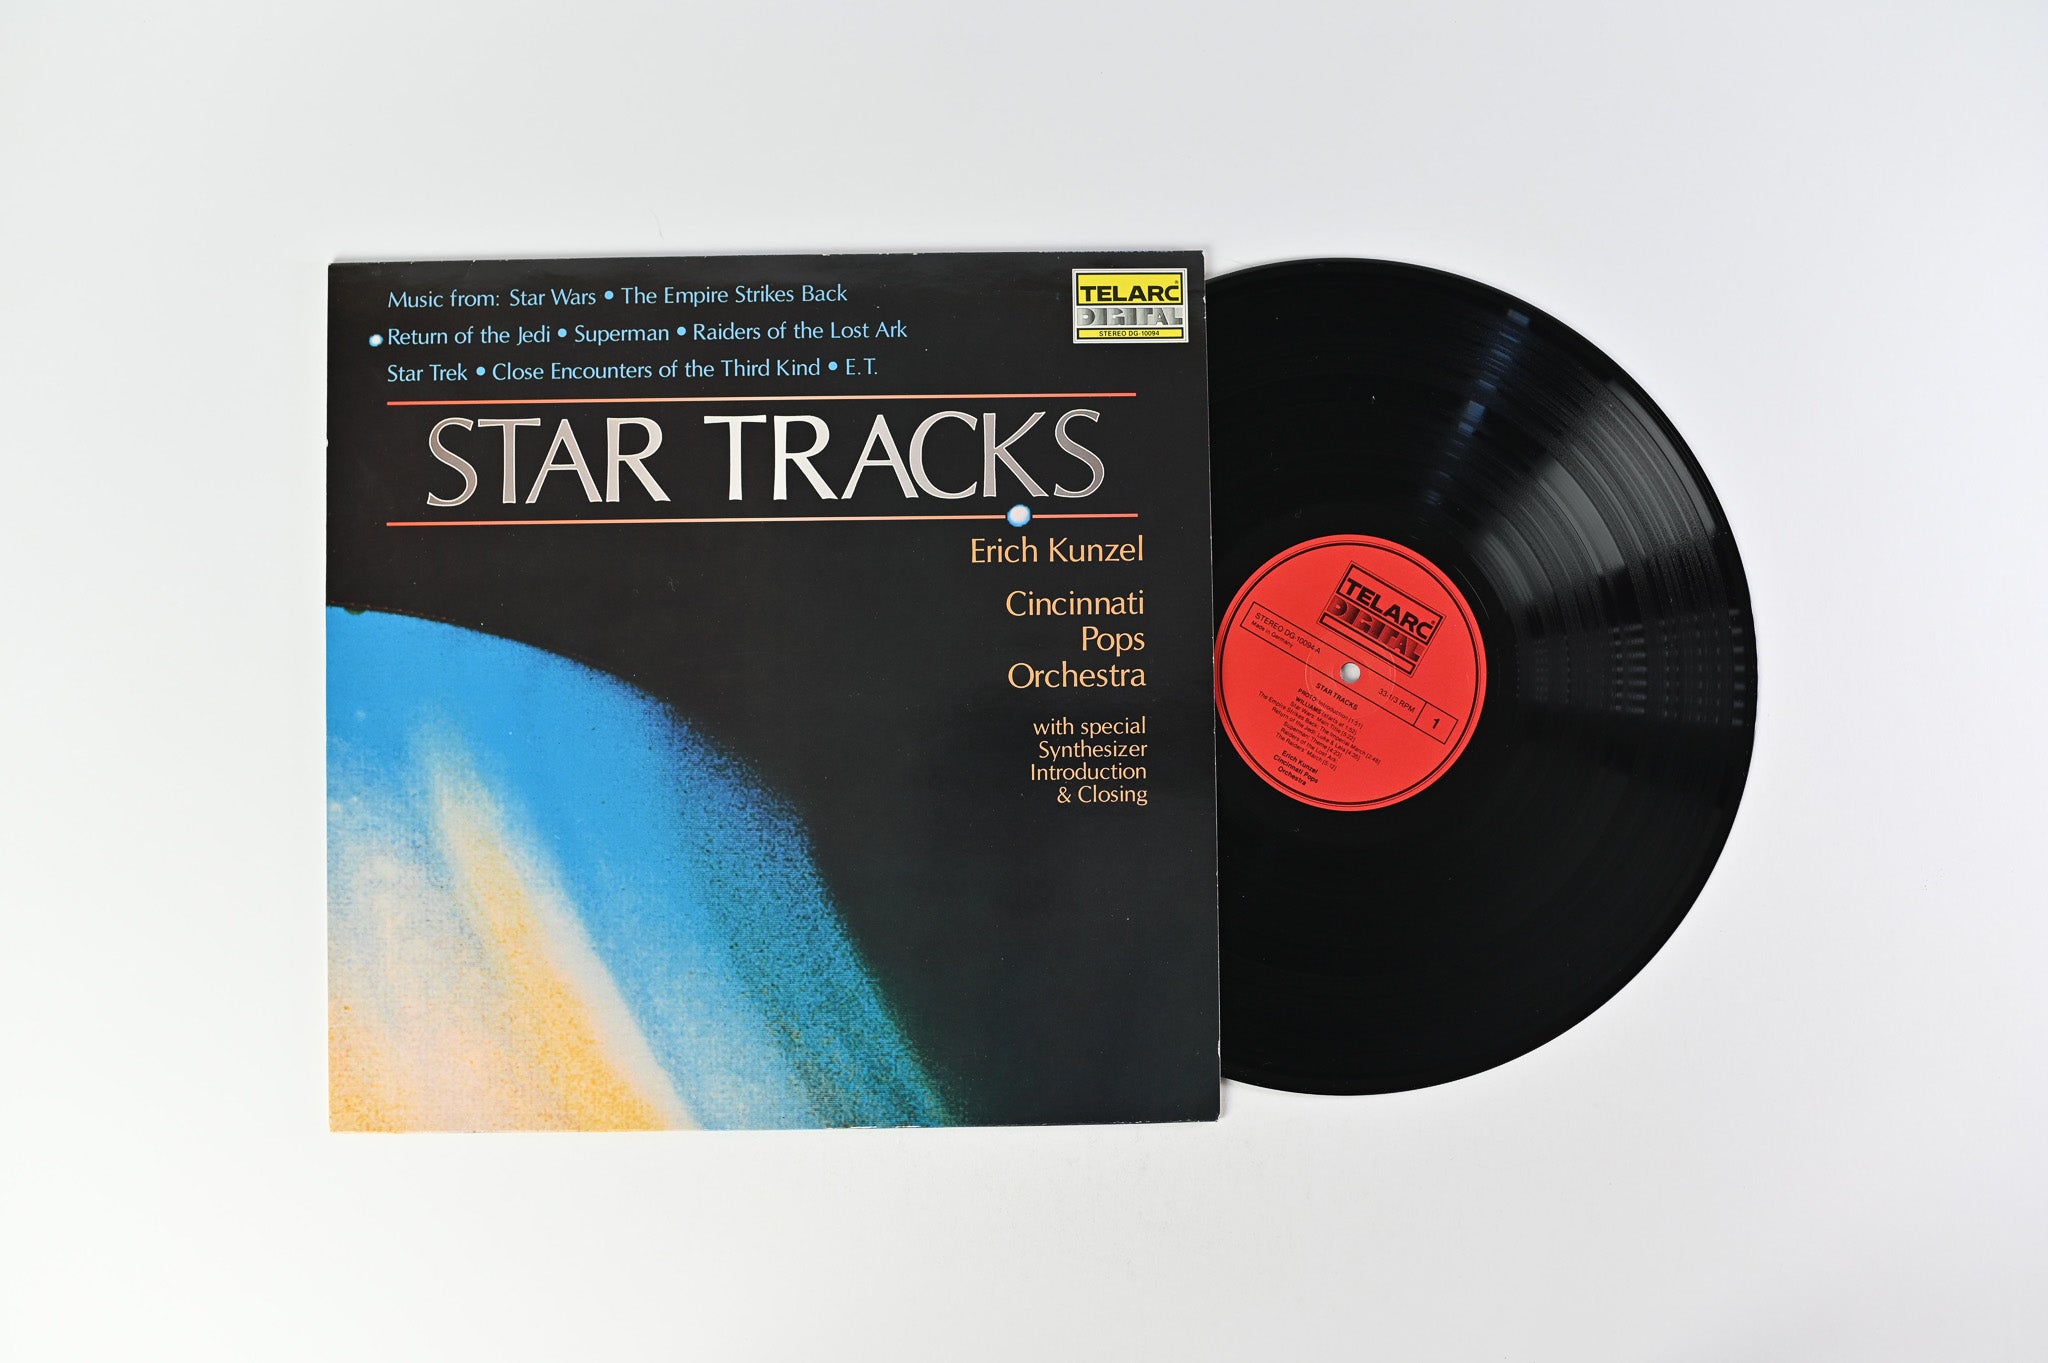 Erich Kunzel - Star Tracks on Telarc